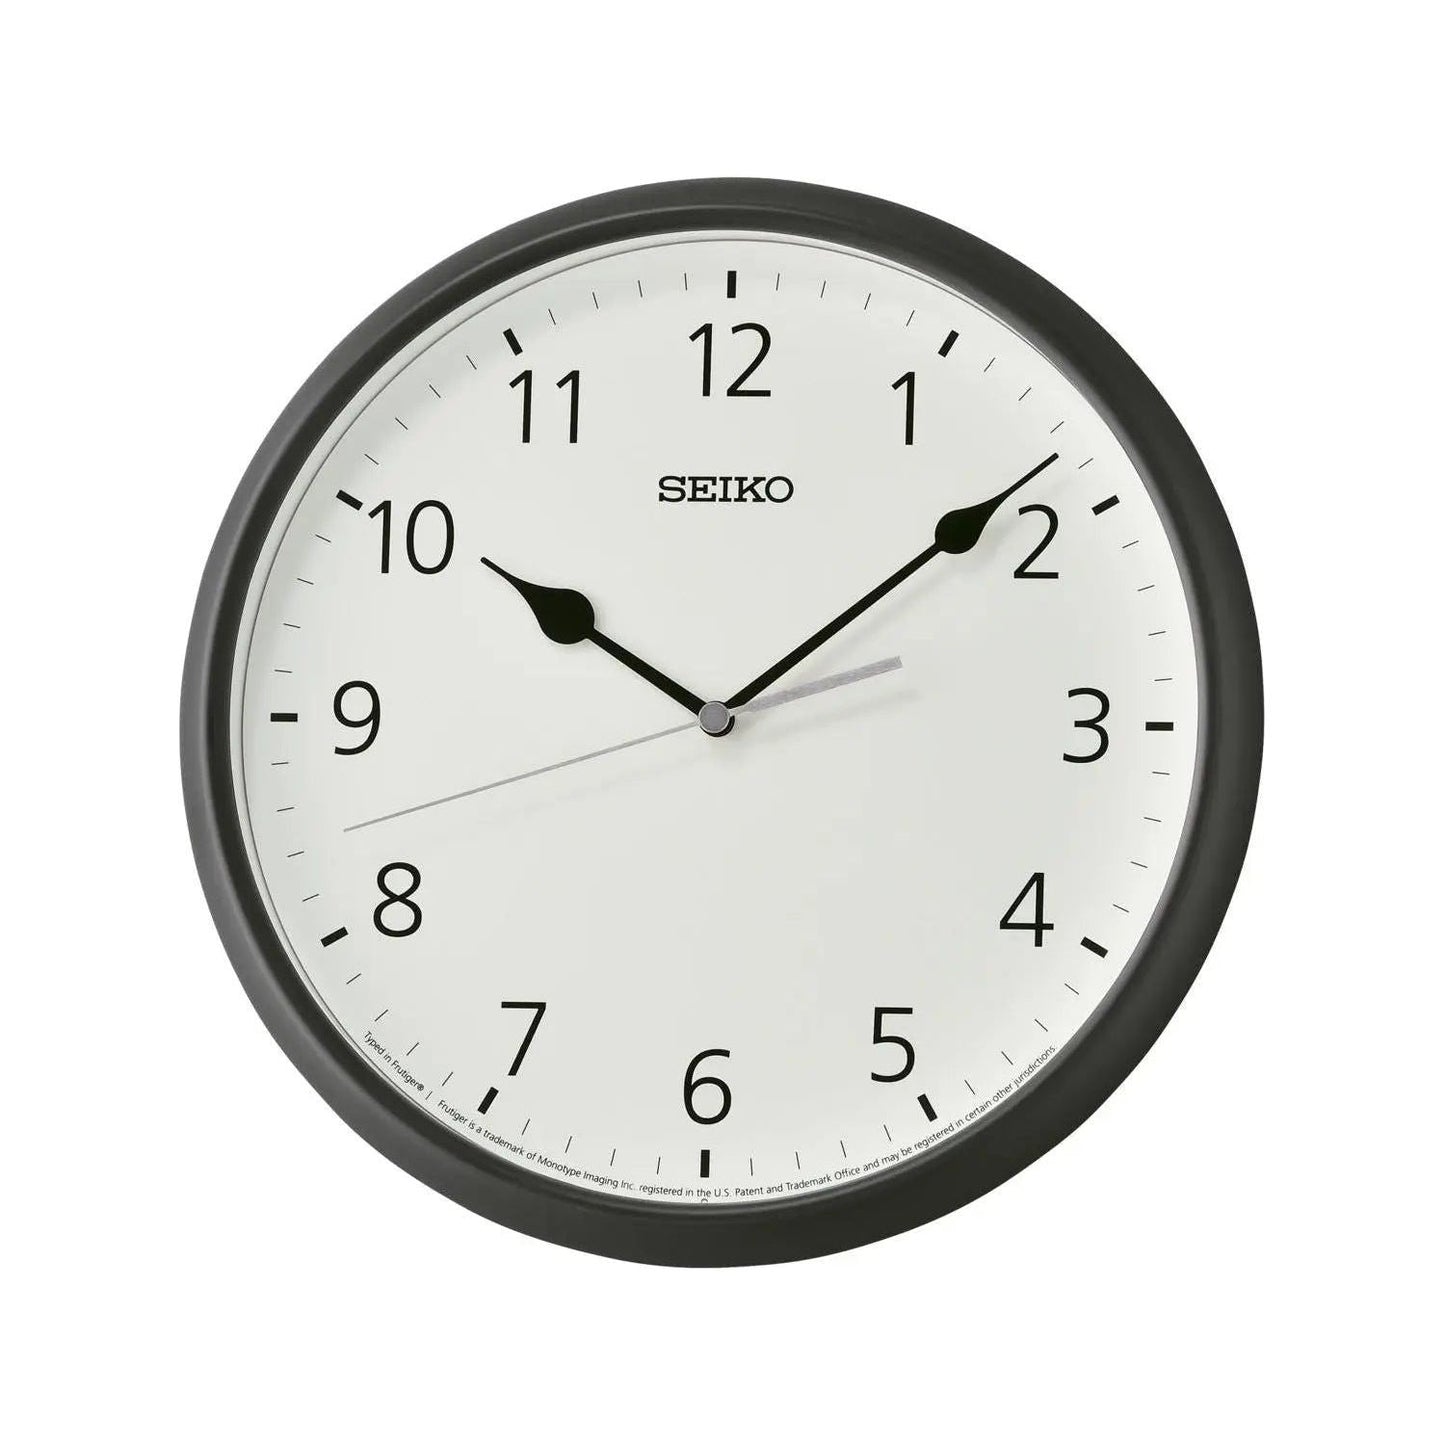 SEIKO CLOCKS SEIKO CLOCKS WATCHES Mod. QXA796K WATCHES seiko-clocks-watches-mod-qxa796k